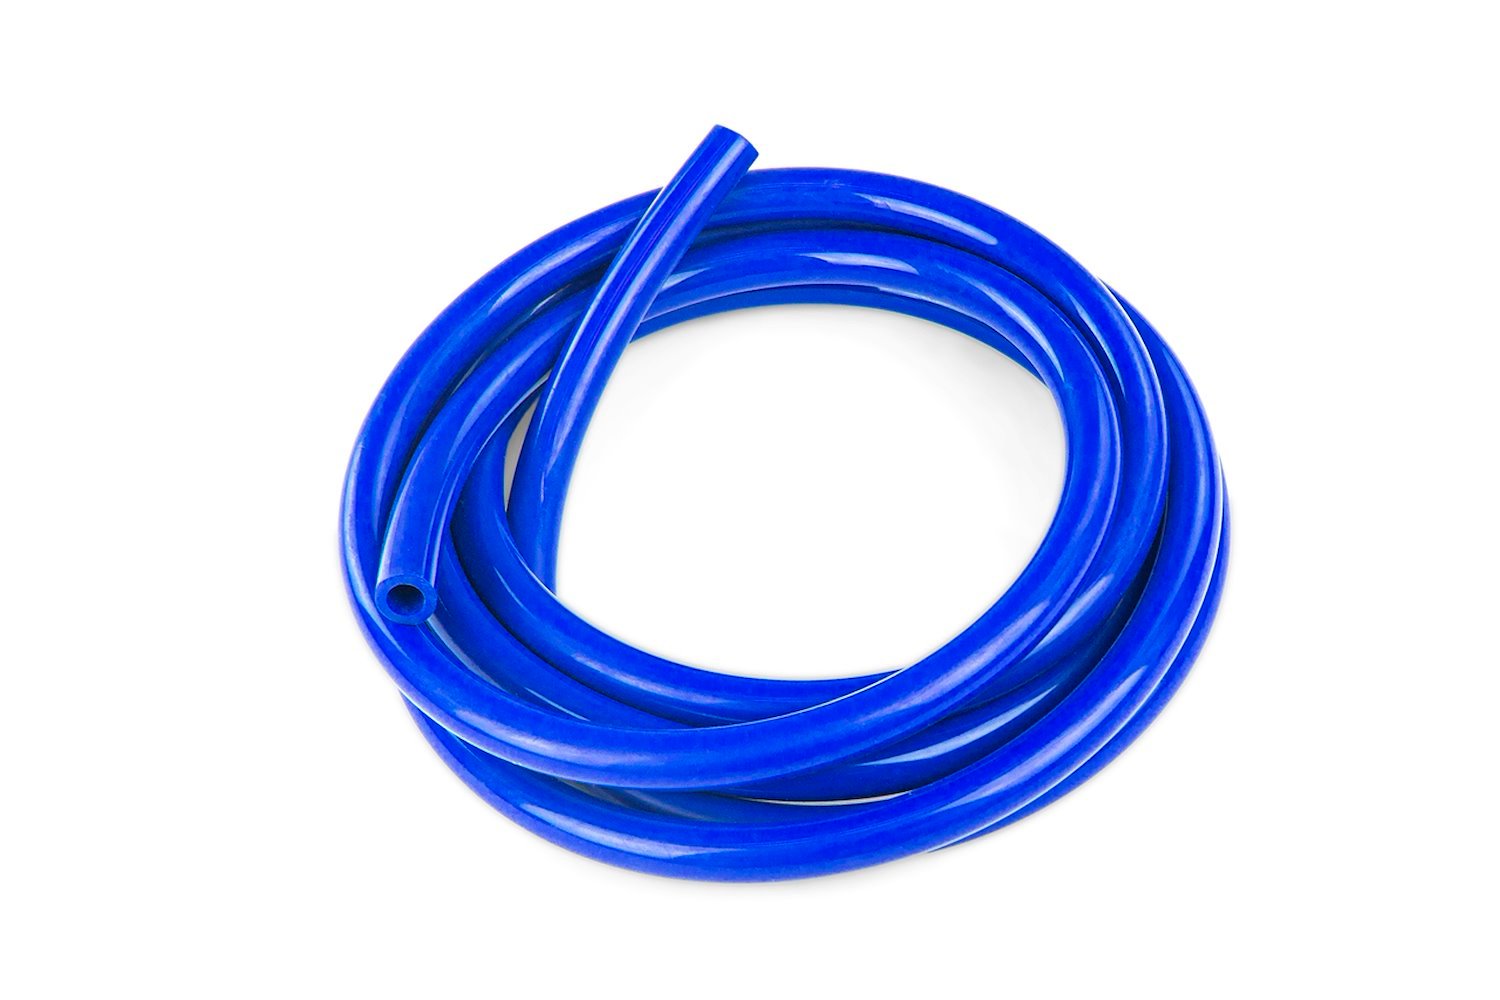 HTSVH5-BLUEx10 High-Temperature Silicone Vacuum Hose Tubing, 13/64 in. ID, 10 ft. Roll, Blue